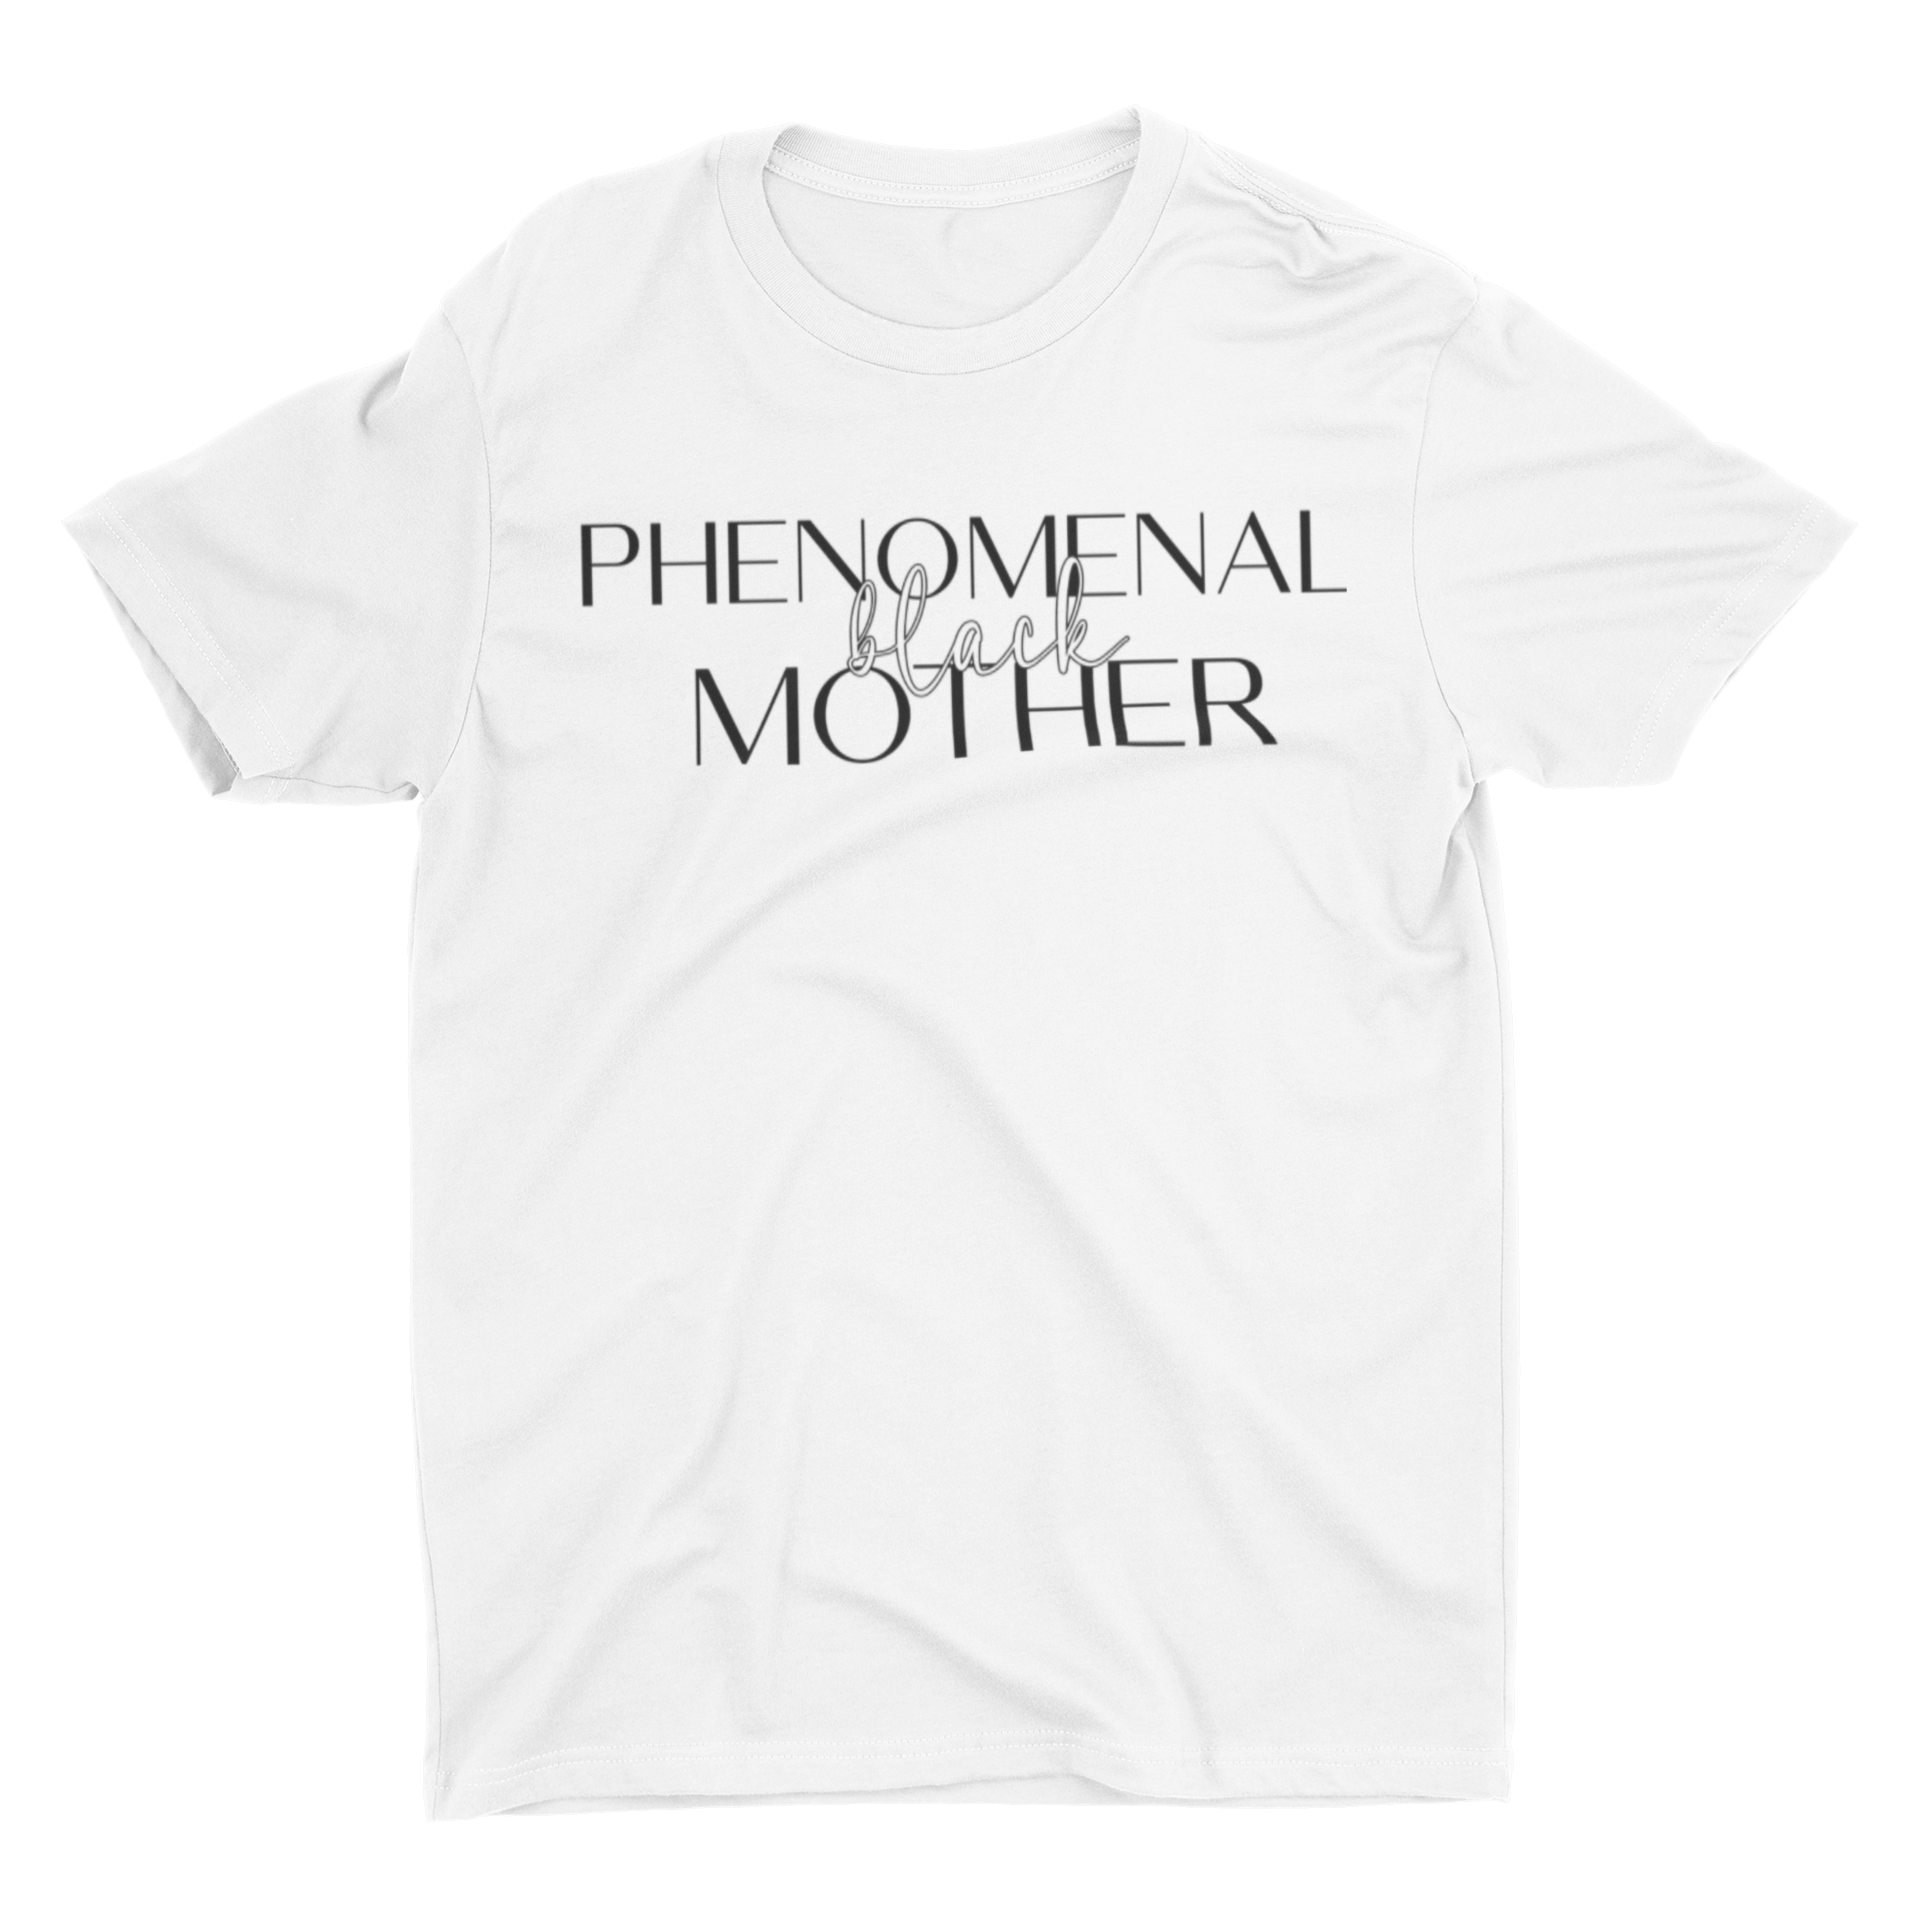 "PHENOMENAL black MOTHER" Design